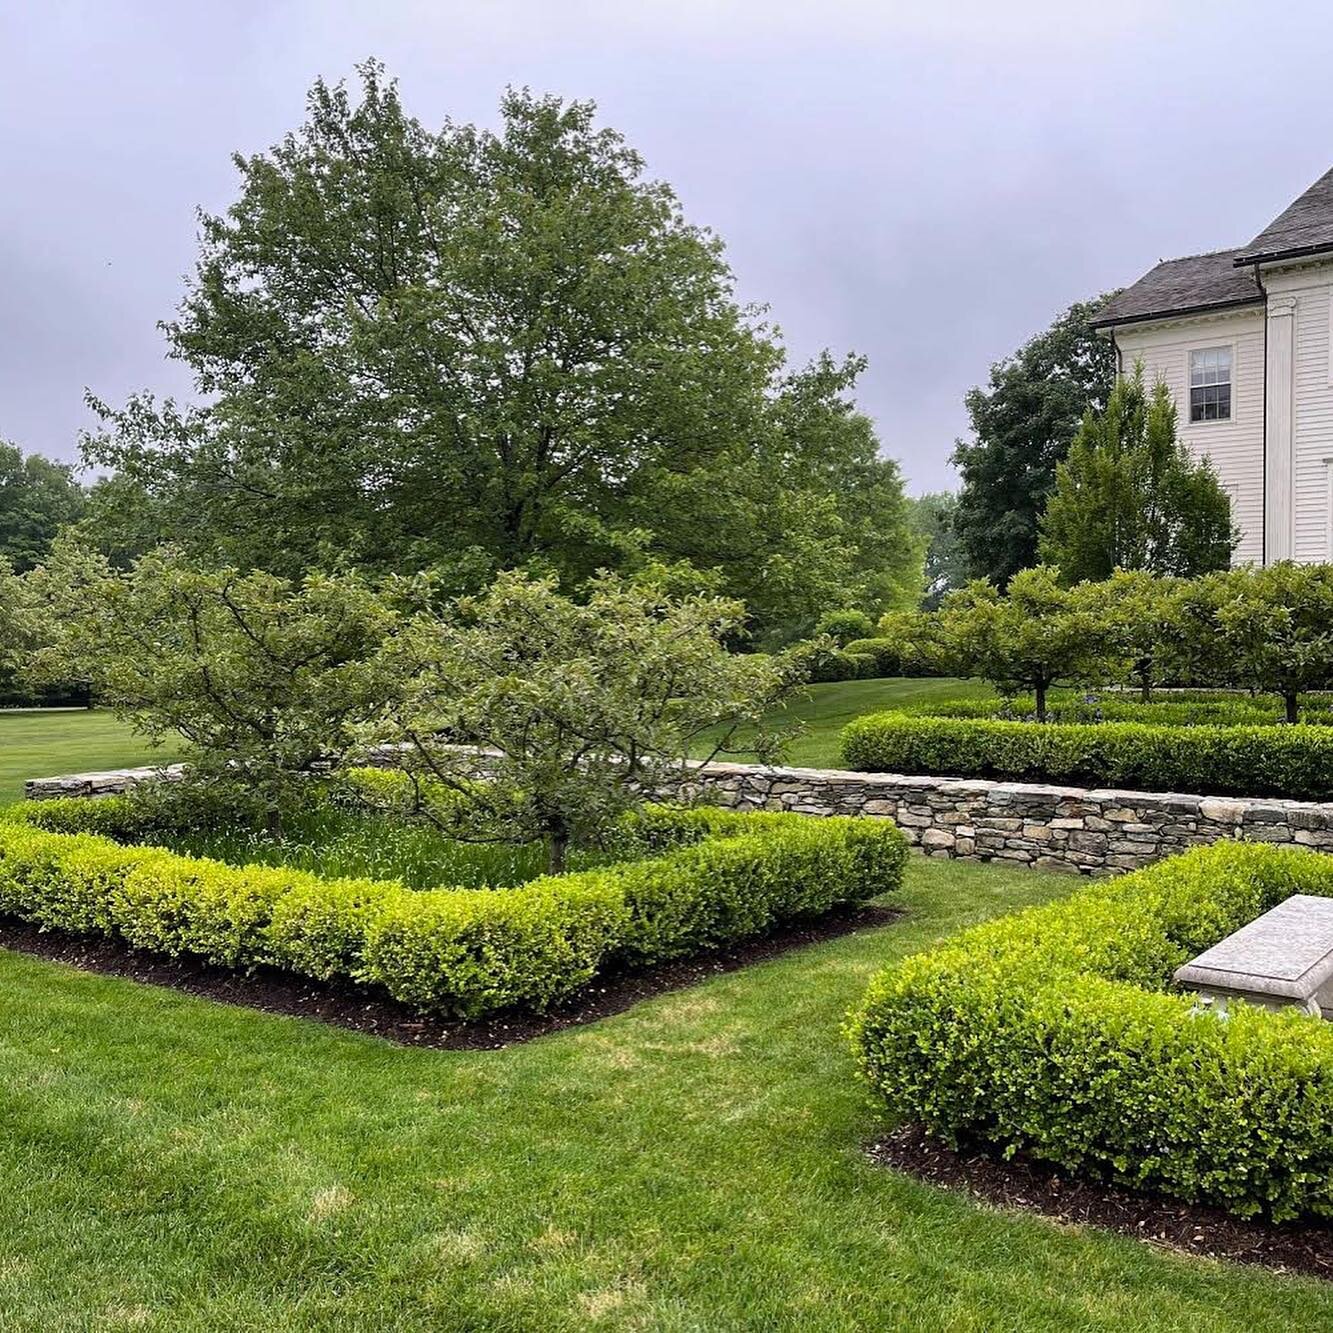 built by @theligningroup 

#symmetricalgarden 
#hedgegardendesign 
#landscapearchitecture
#garden
#landscape
#saturatedcolors